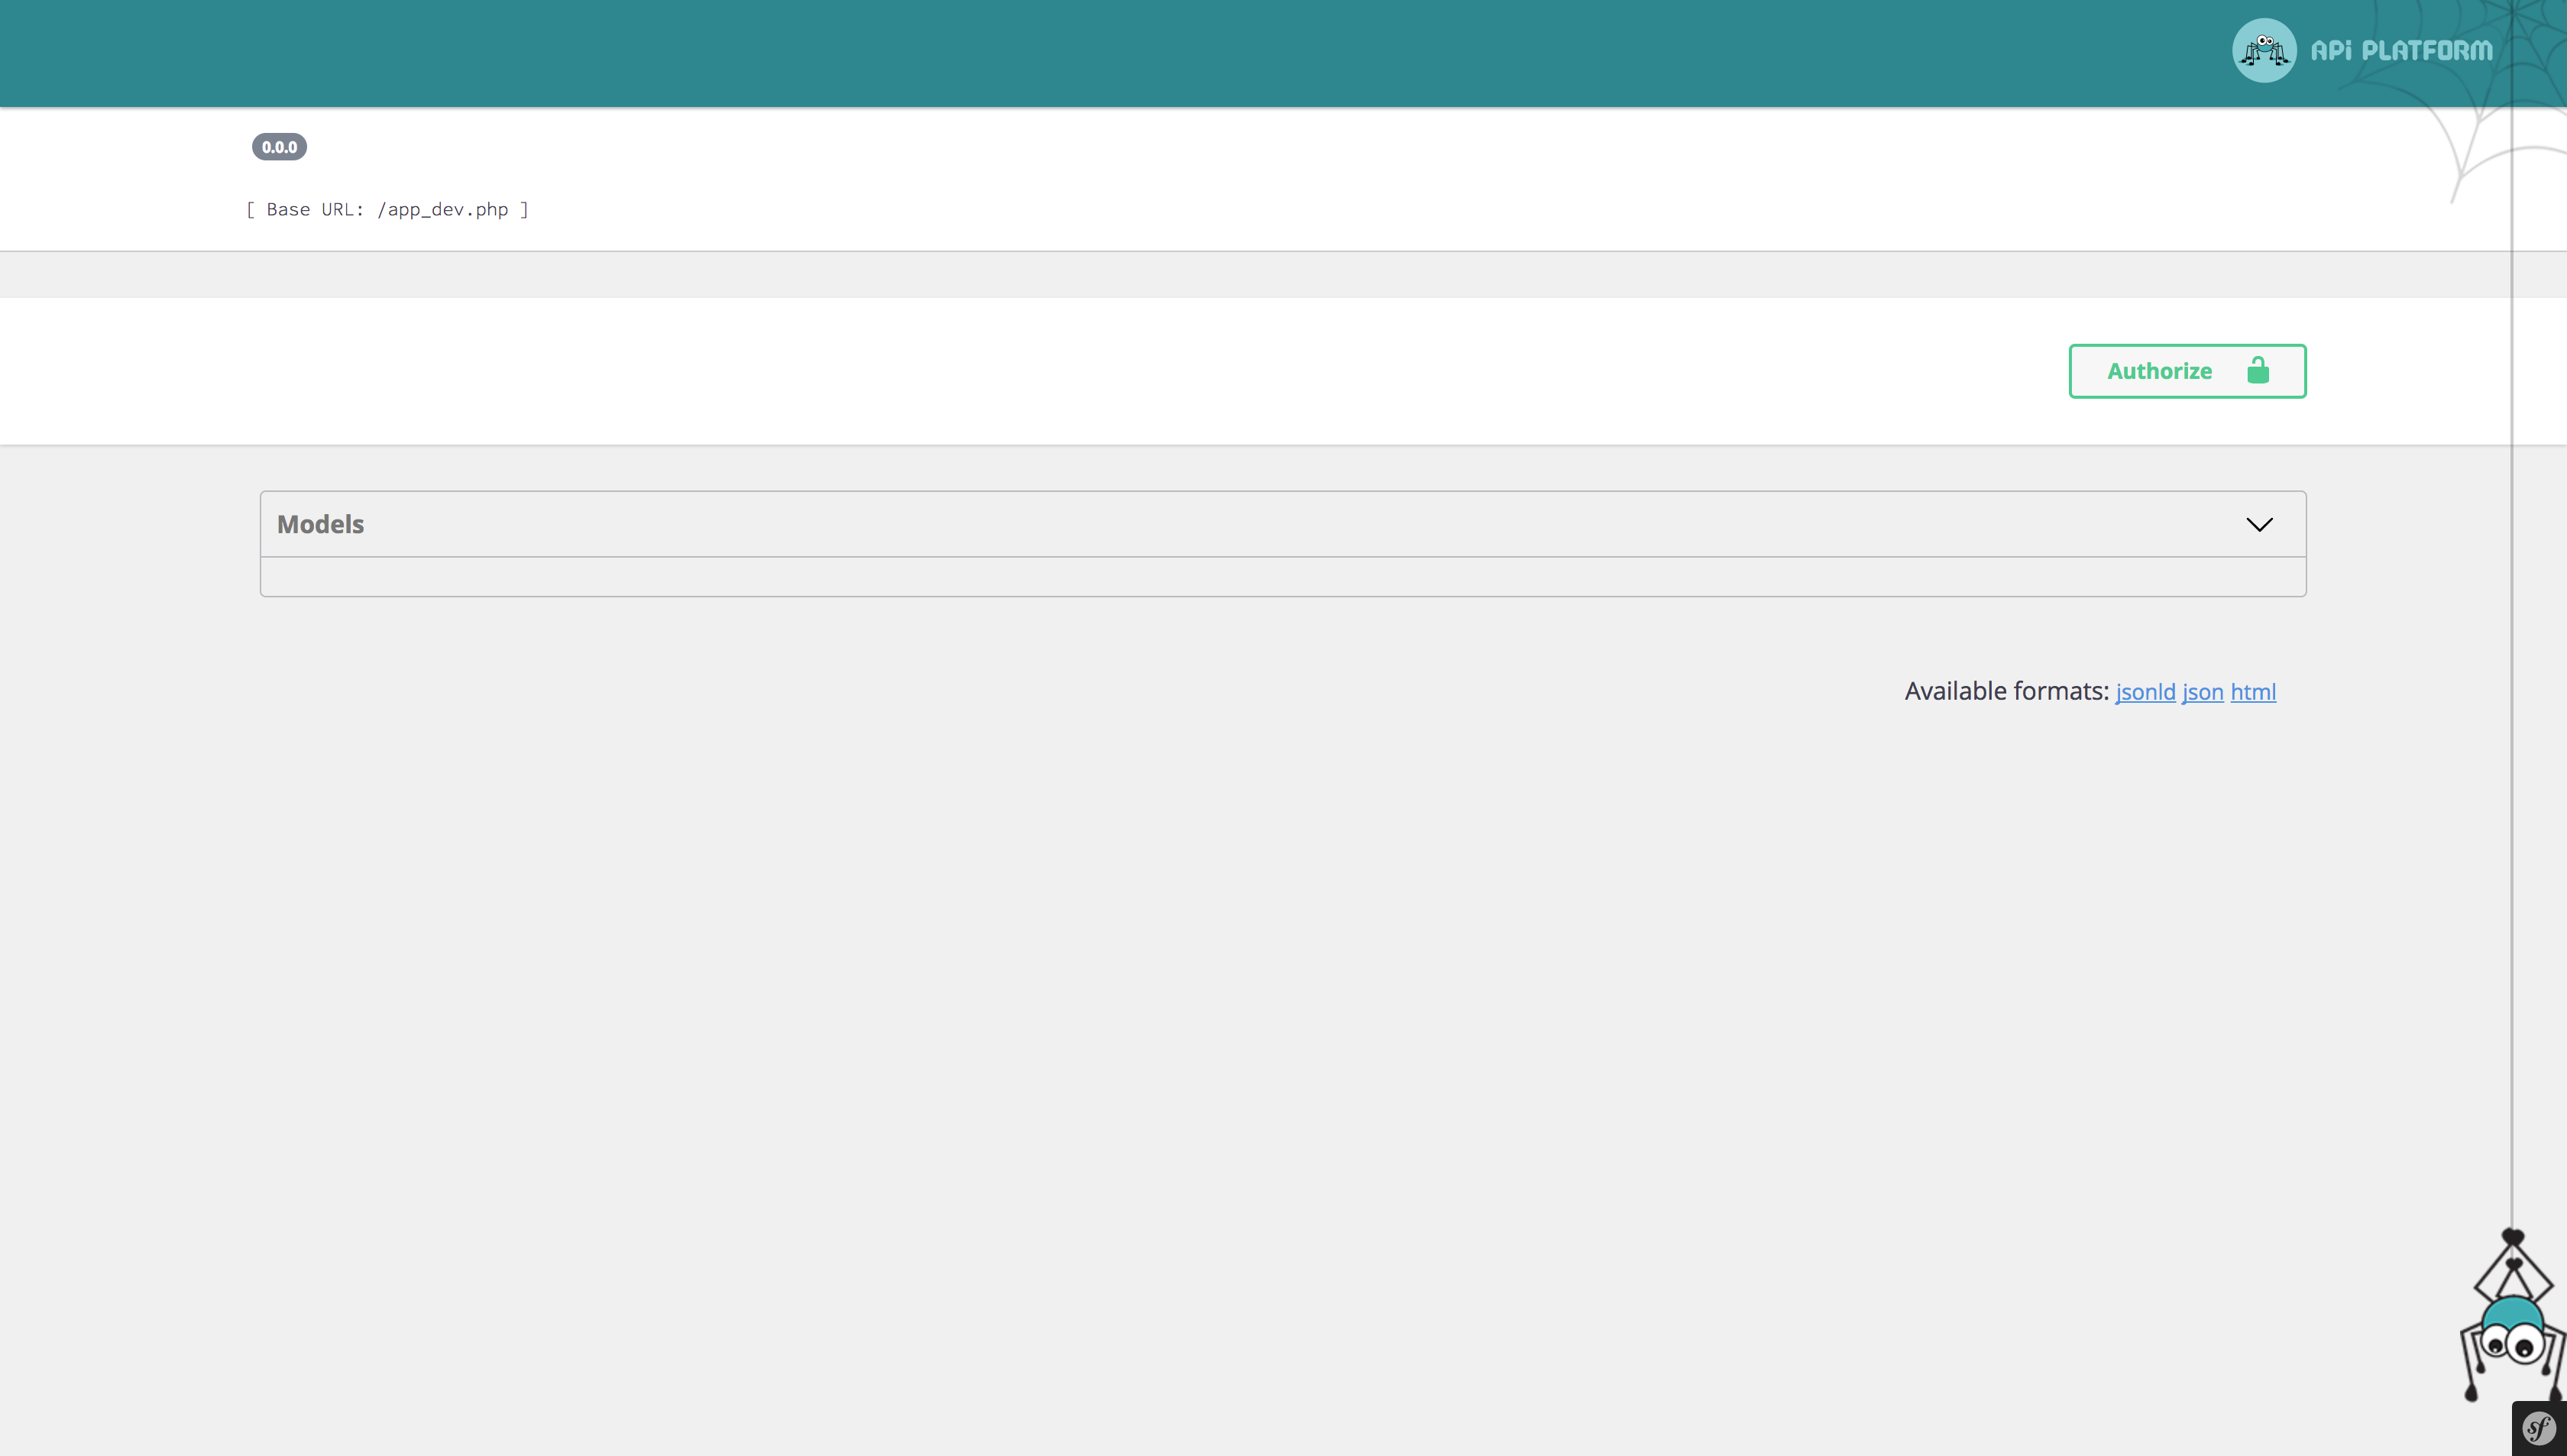 Screenshot of API Platform with Authorize button